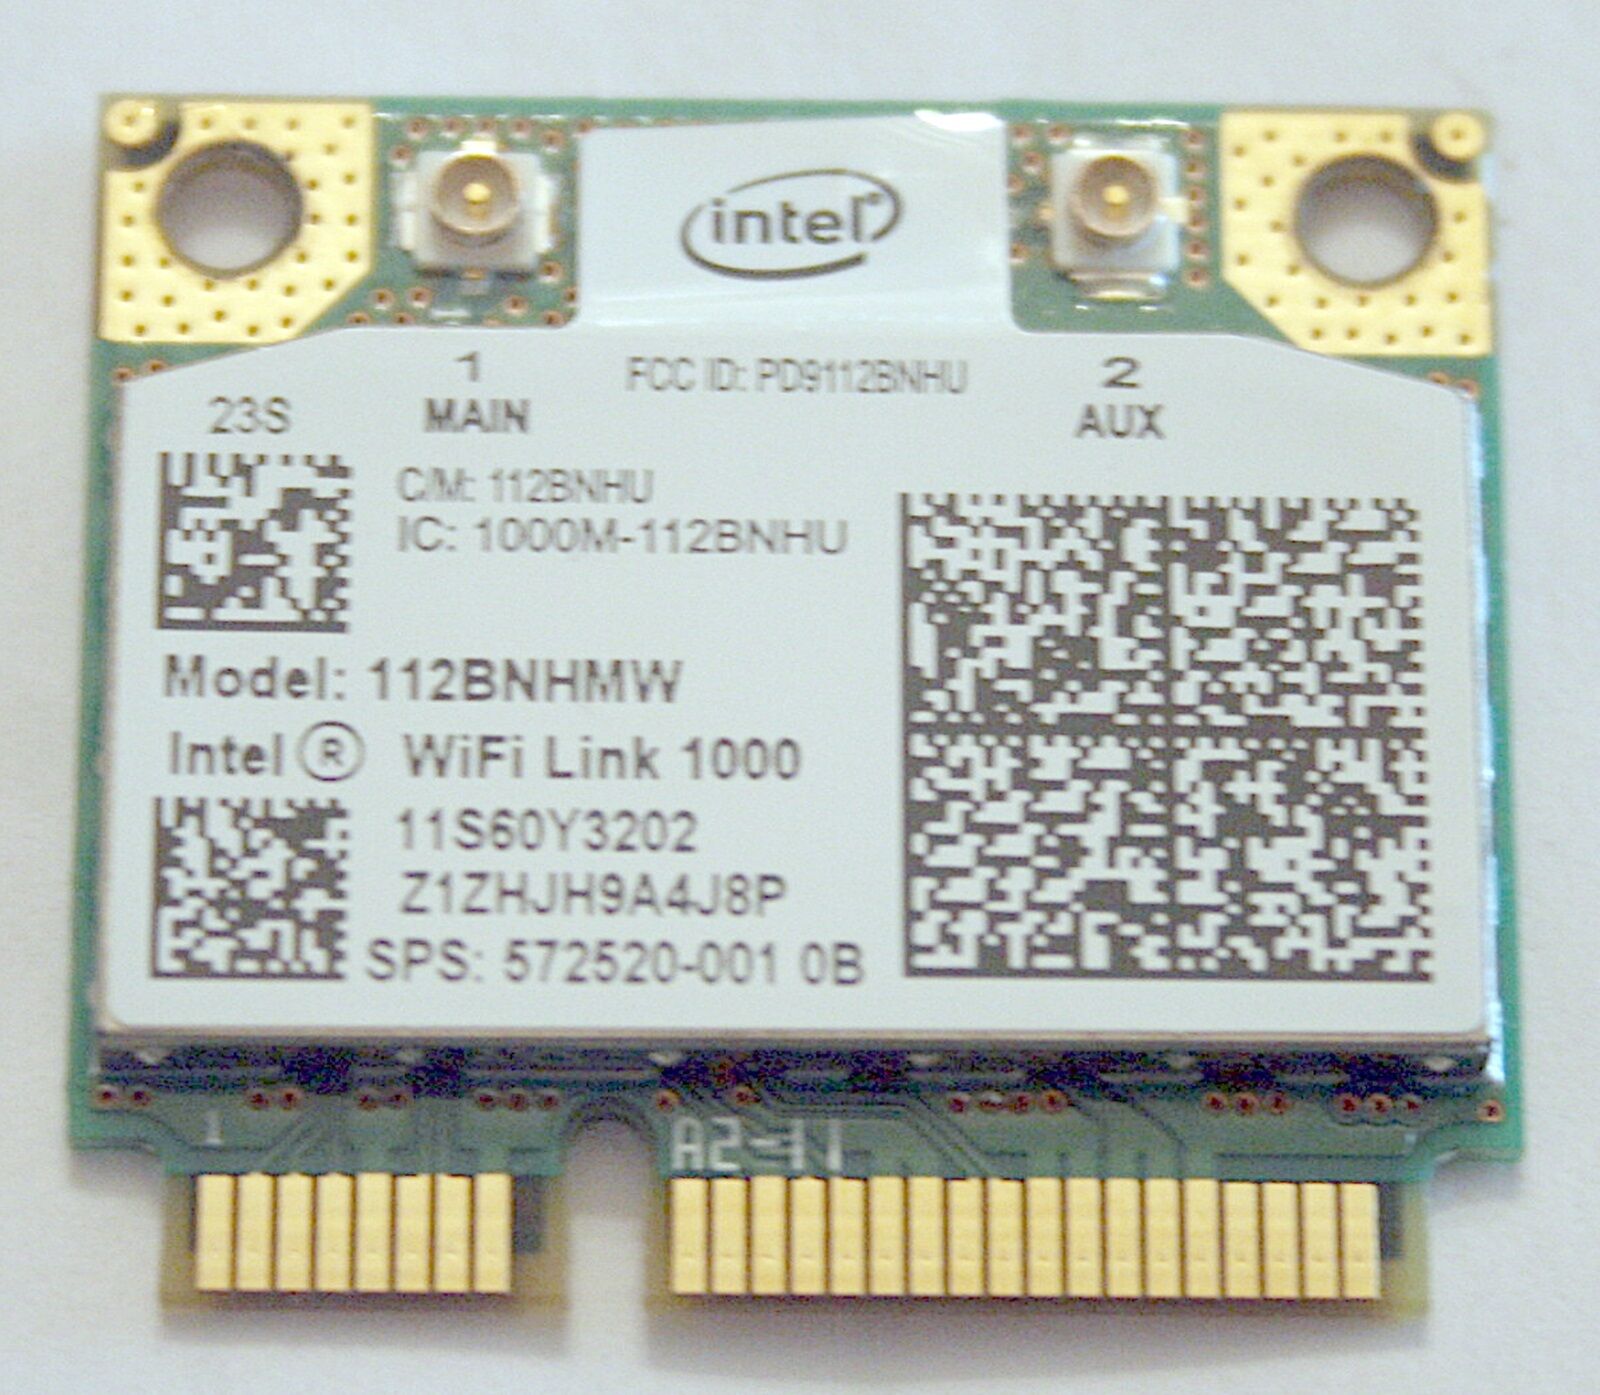 HP INTEL WIFI LINK 1000 802.11B/G/N WLAN MODULE - 572520-001